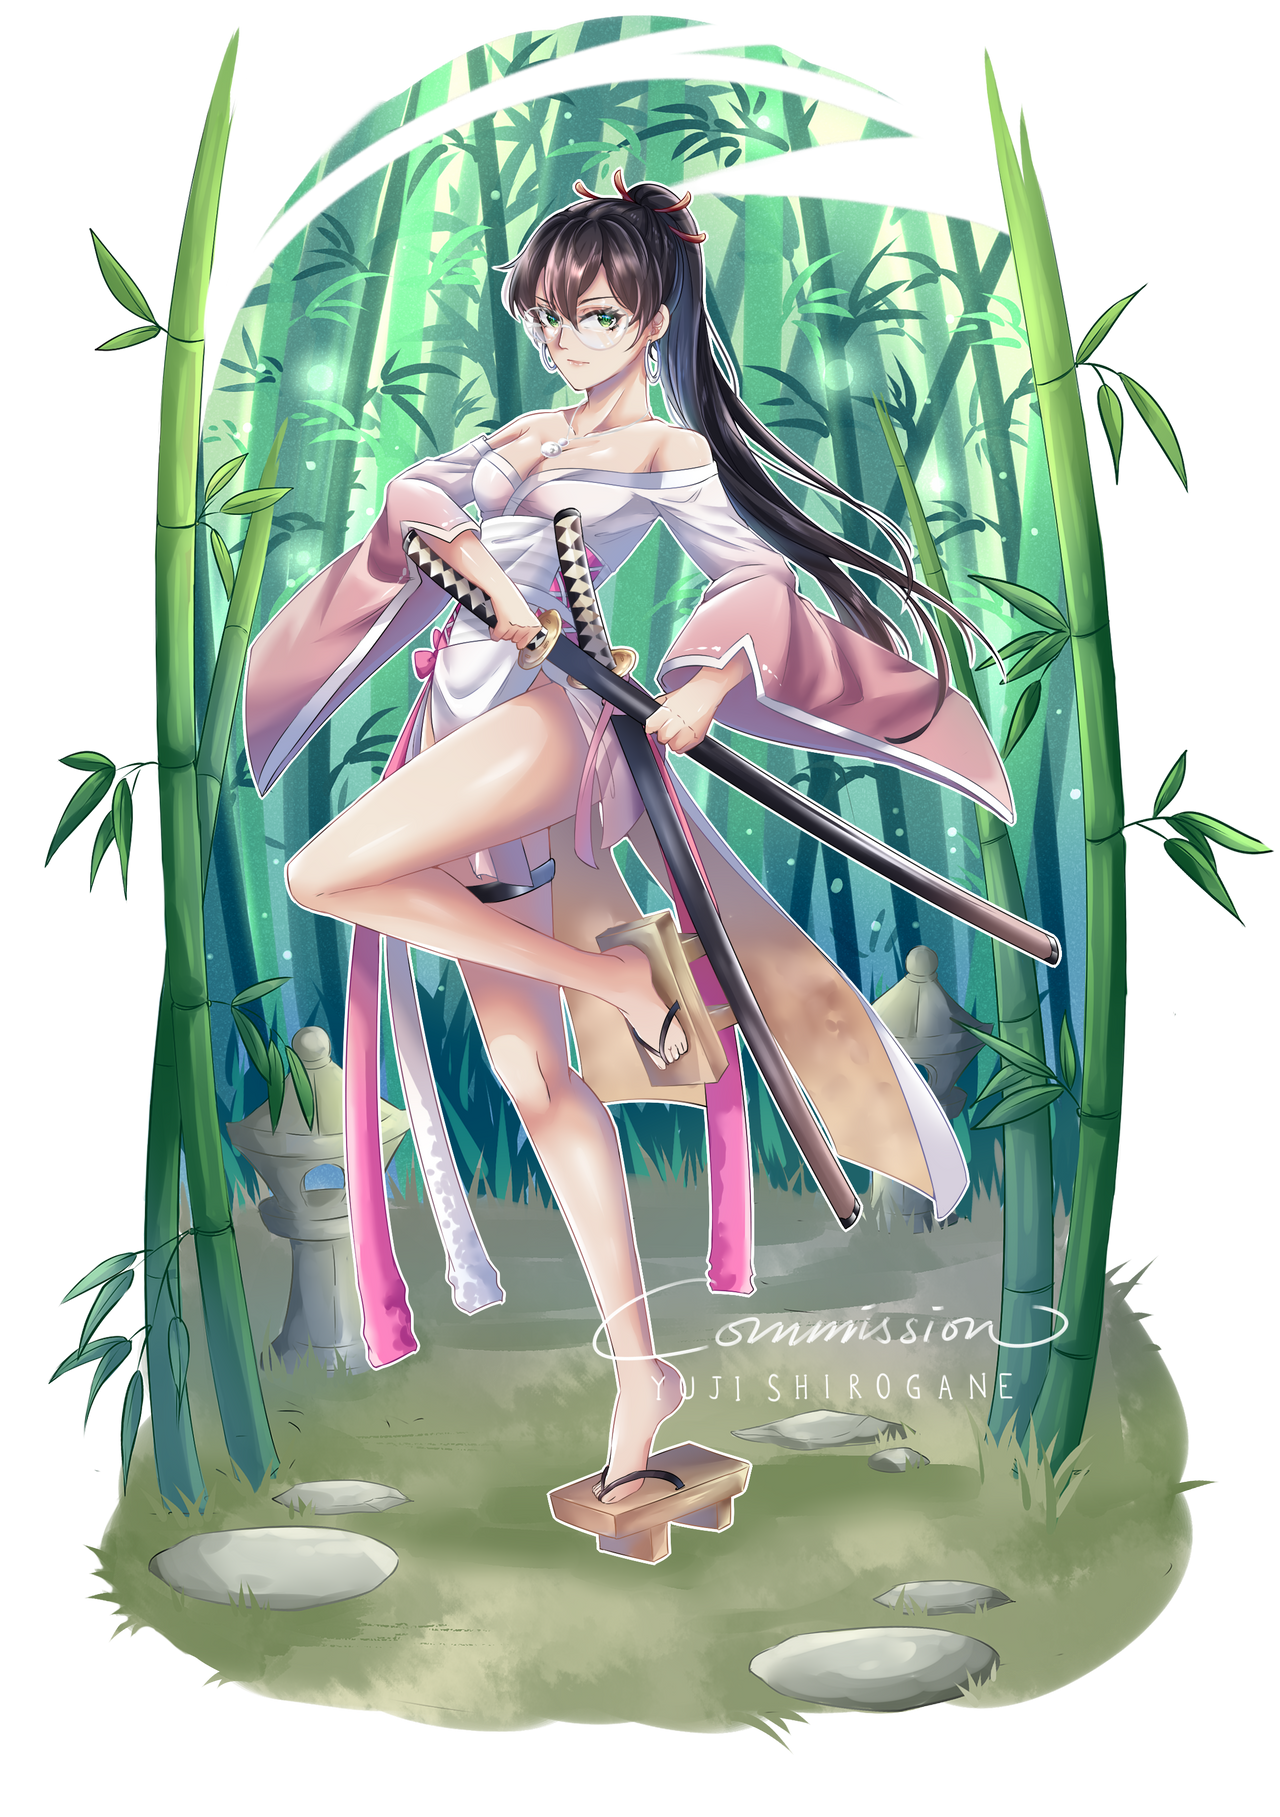 Comm] Samurai Princess Aldren by Yuji-shirogane on DeviantArt